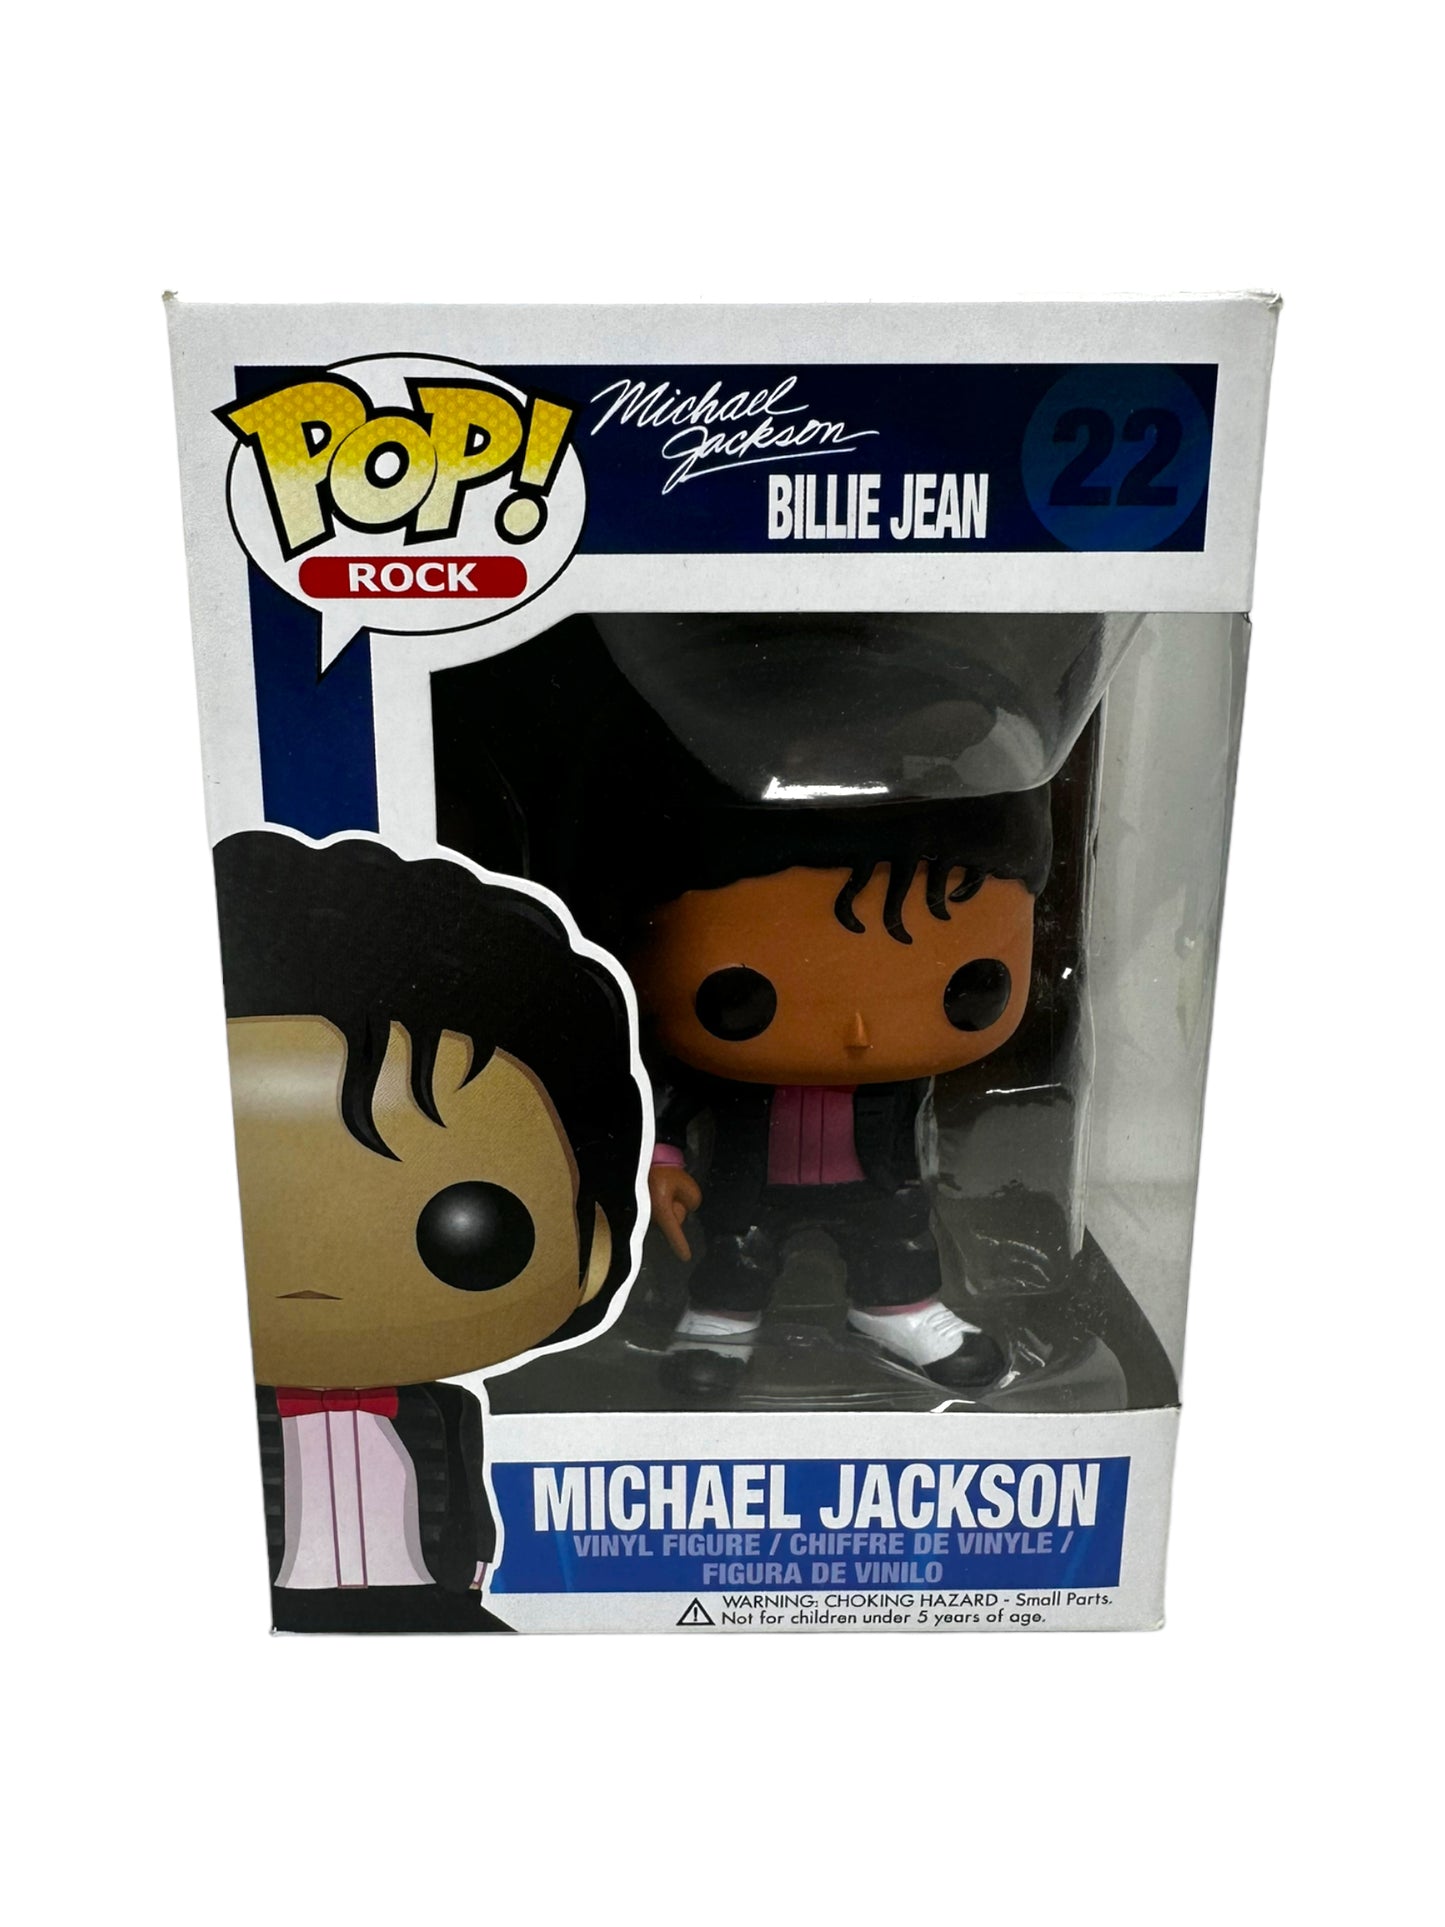 Sold 9/25 2011 Michael Jackson 22 (Billie Jean)